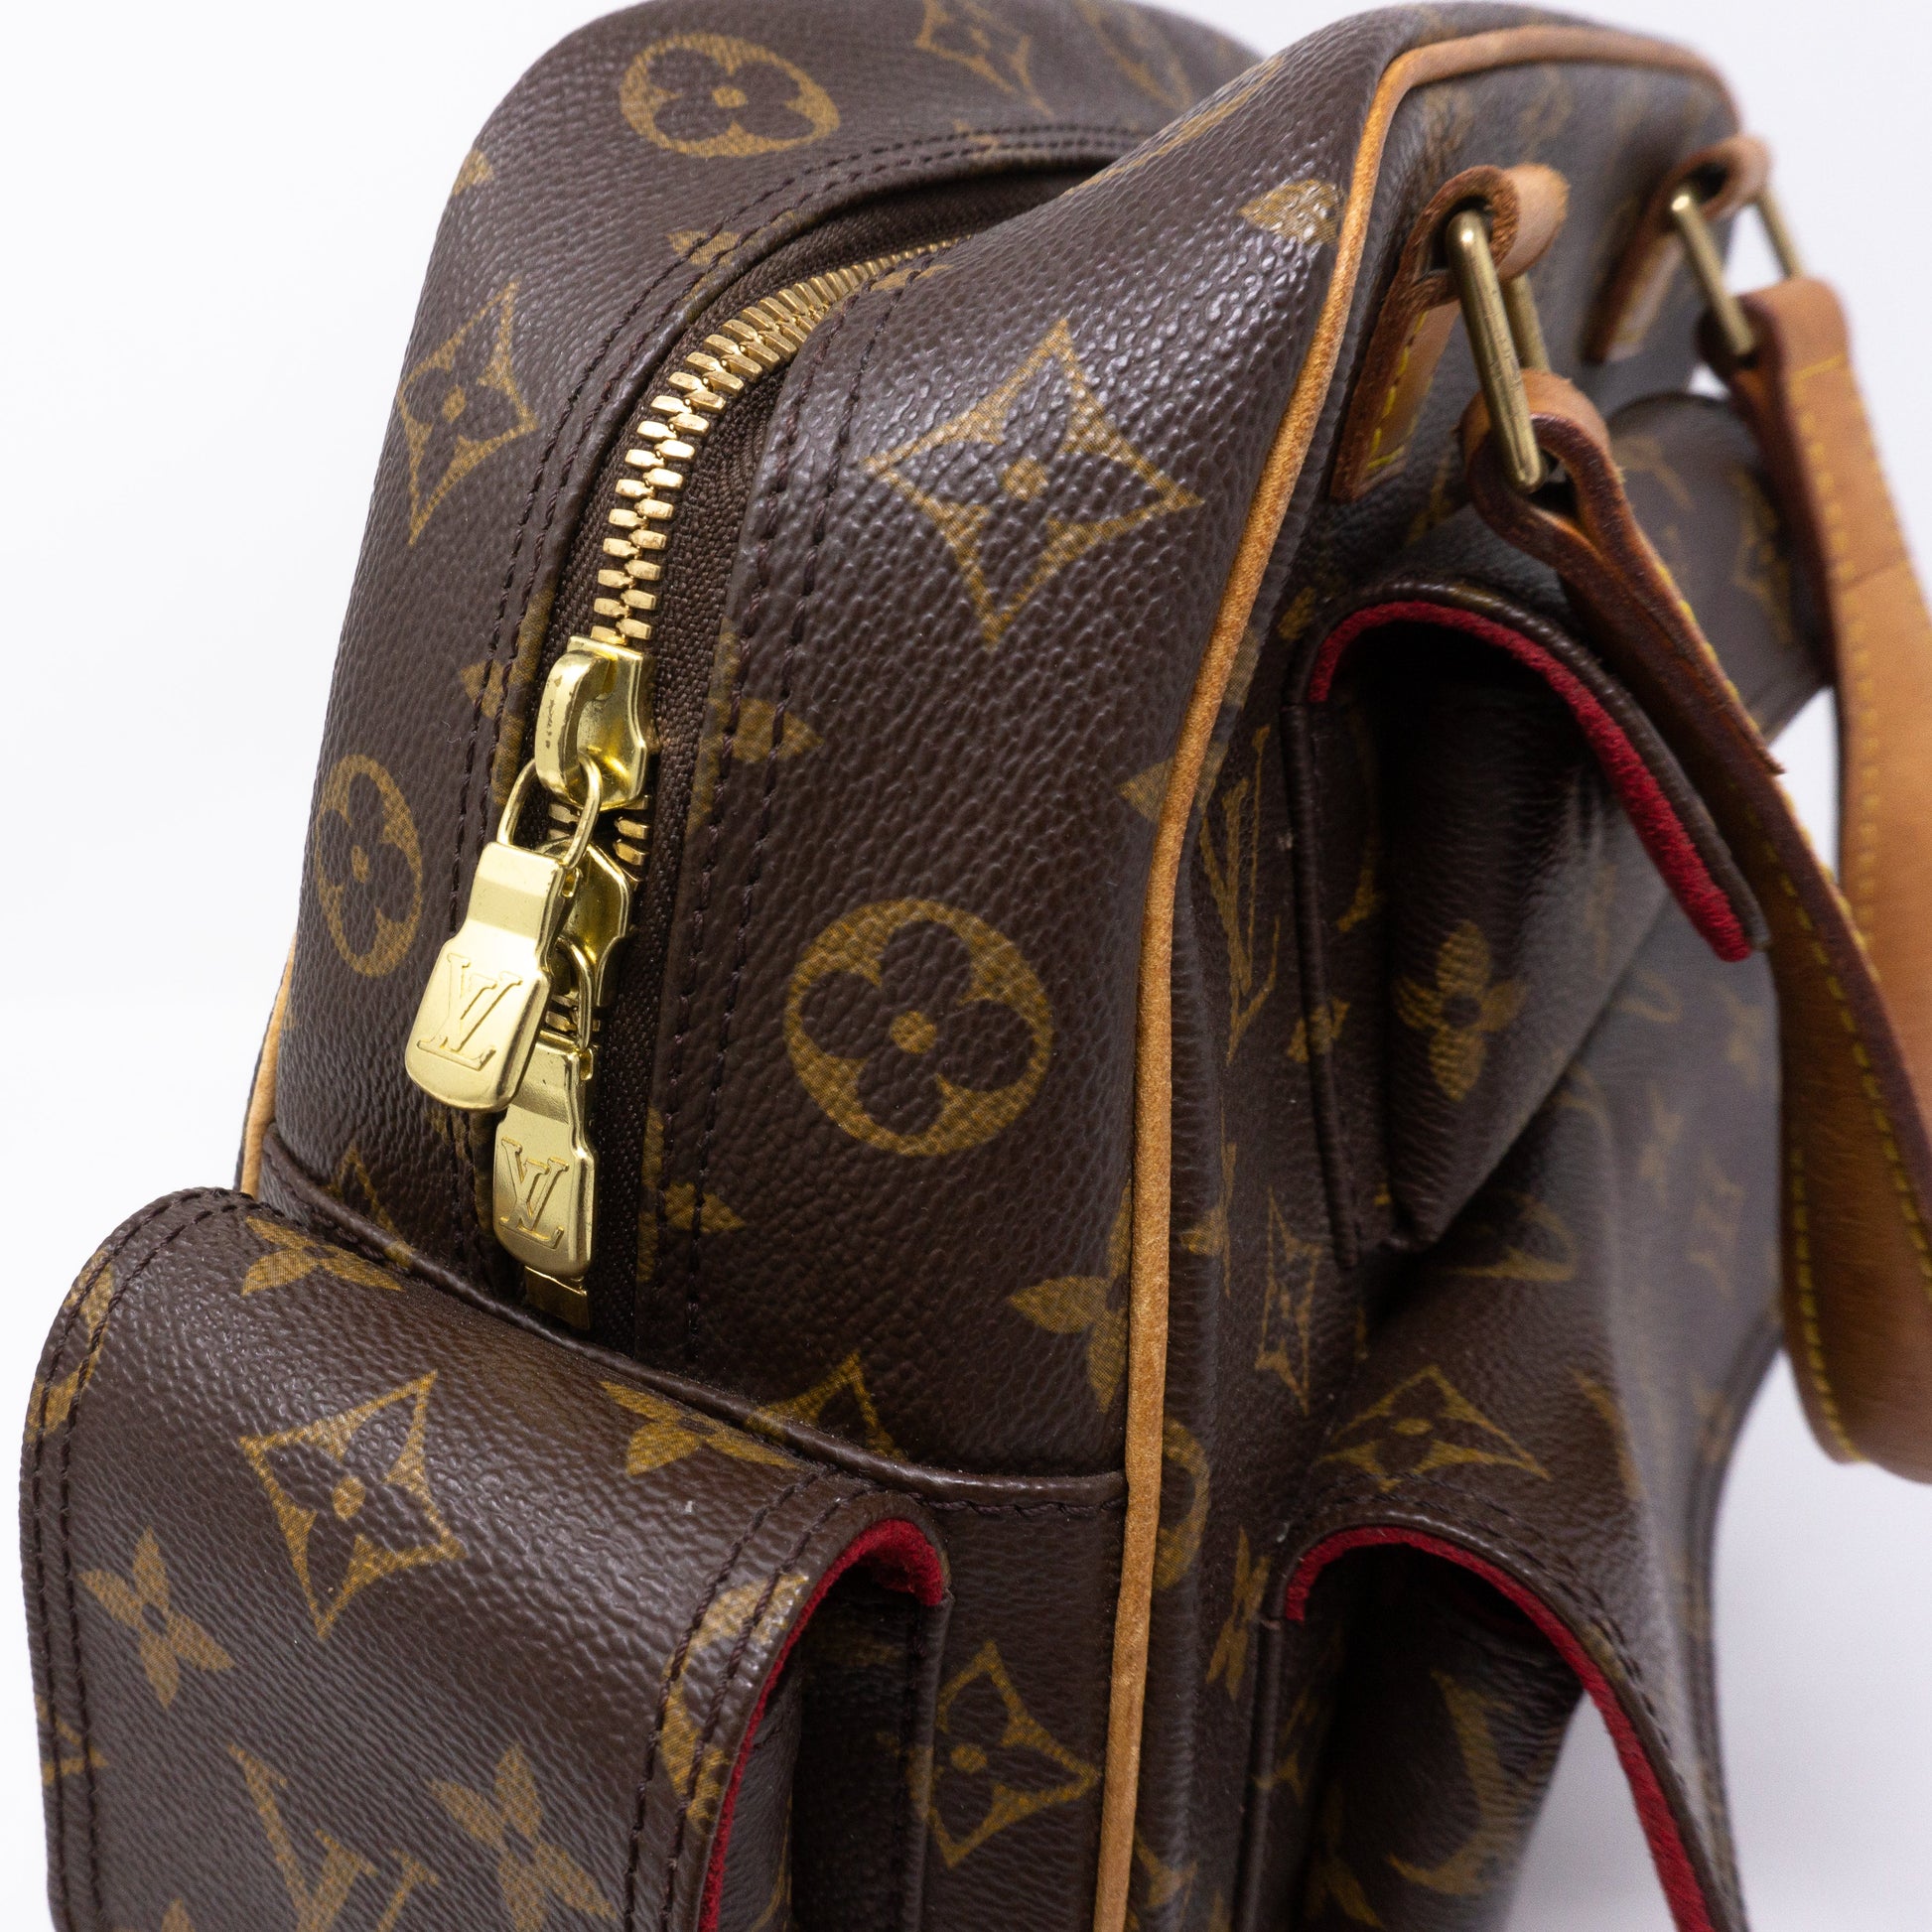 Authentic Louis Vuitton Excentri Cite Handbag with Strap